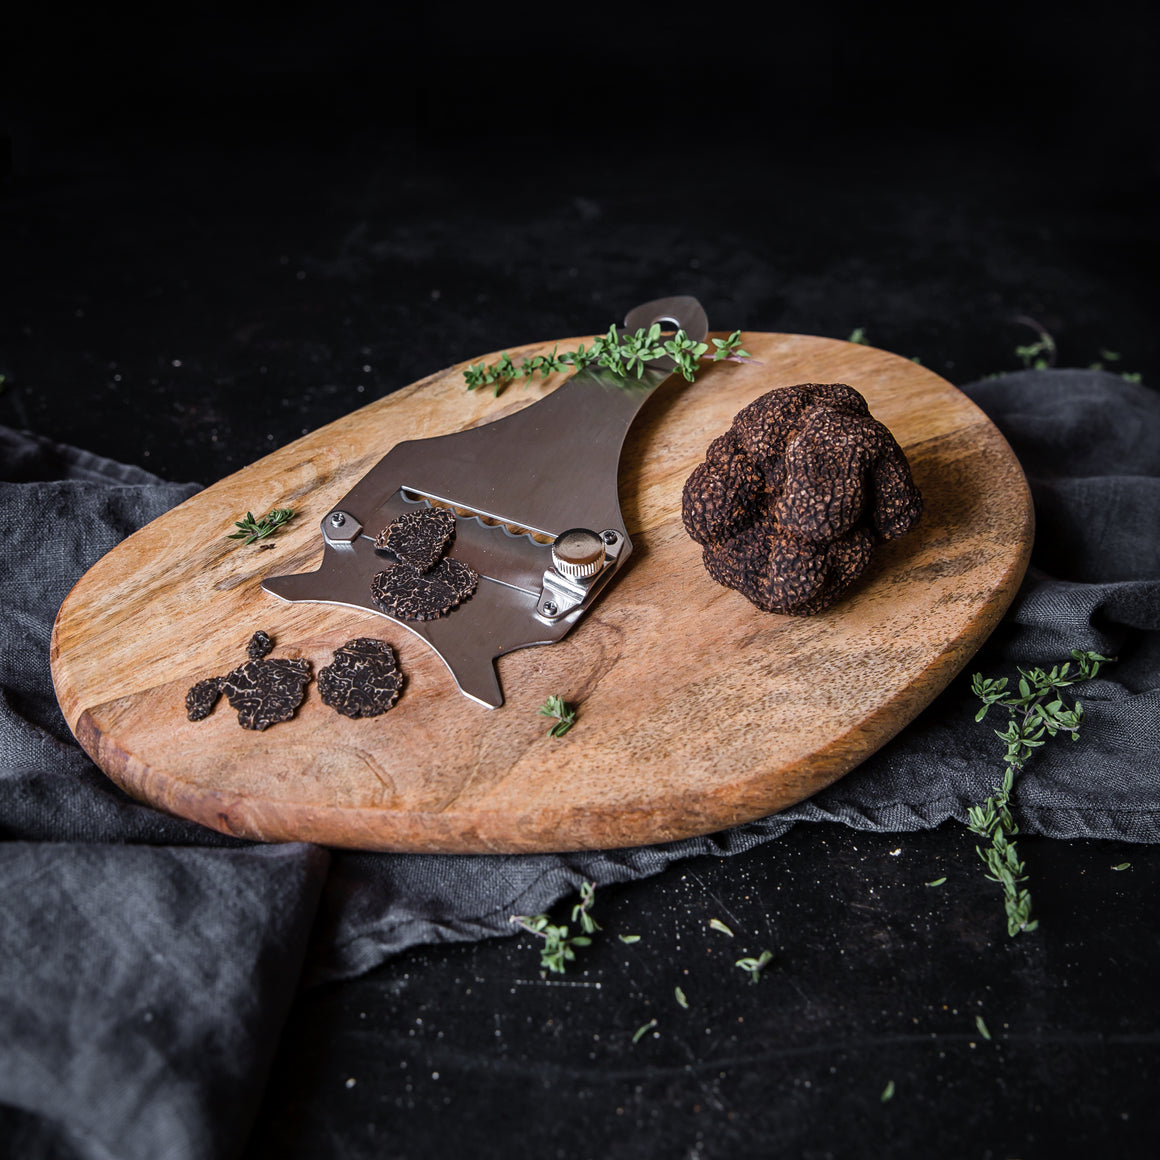 Tasmanian Truffle and a truffle shaver